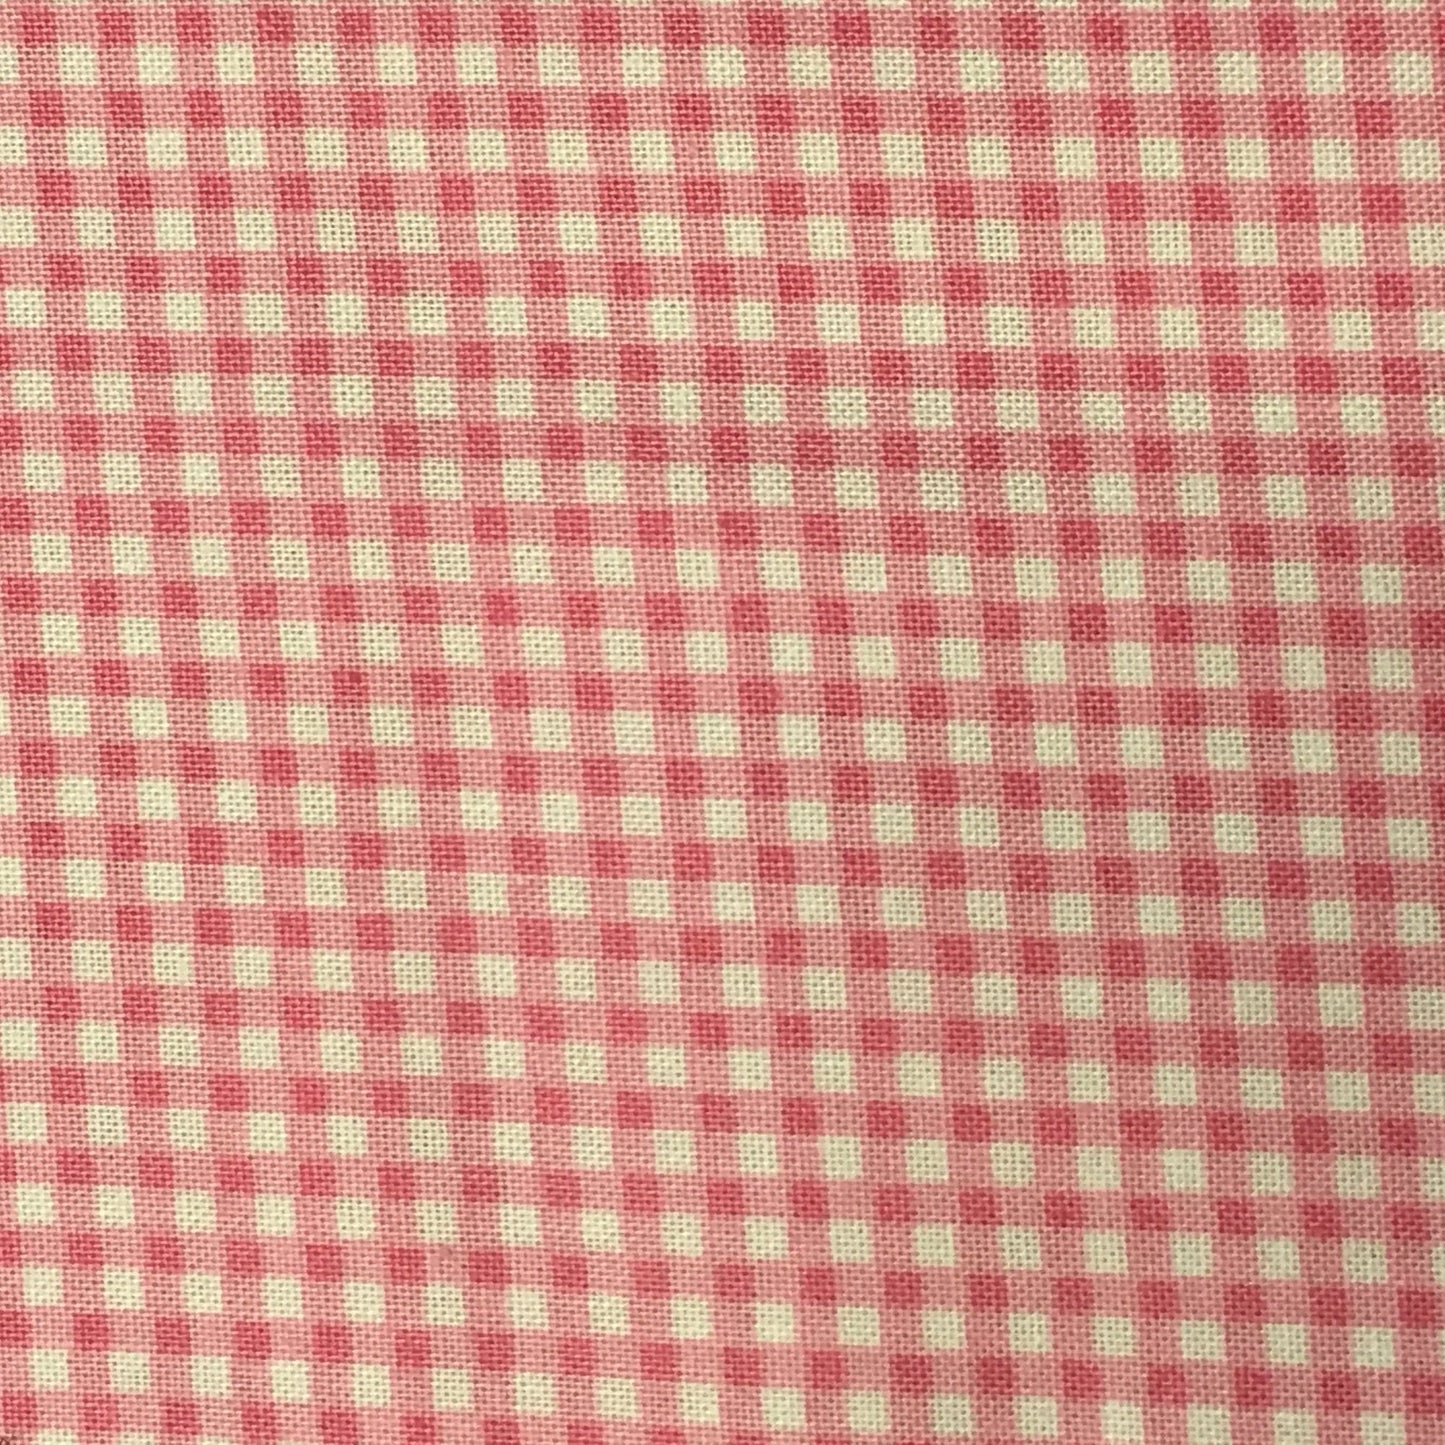 Fabric Felt - 1/8" Gingham - Pink